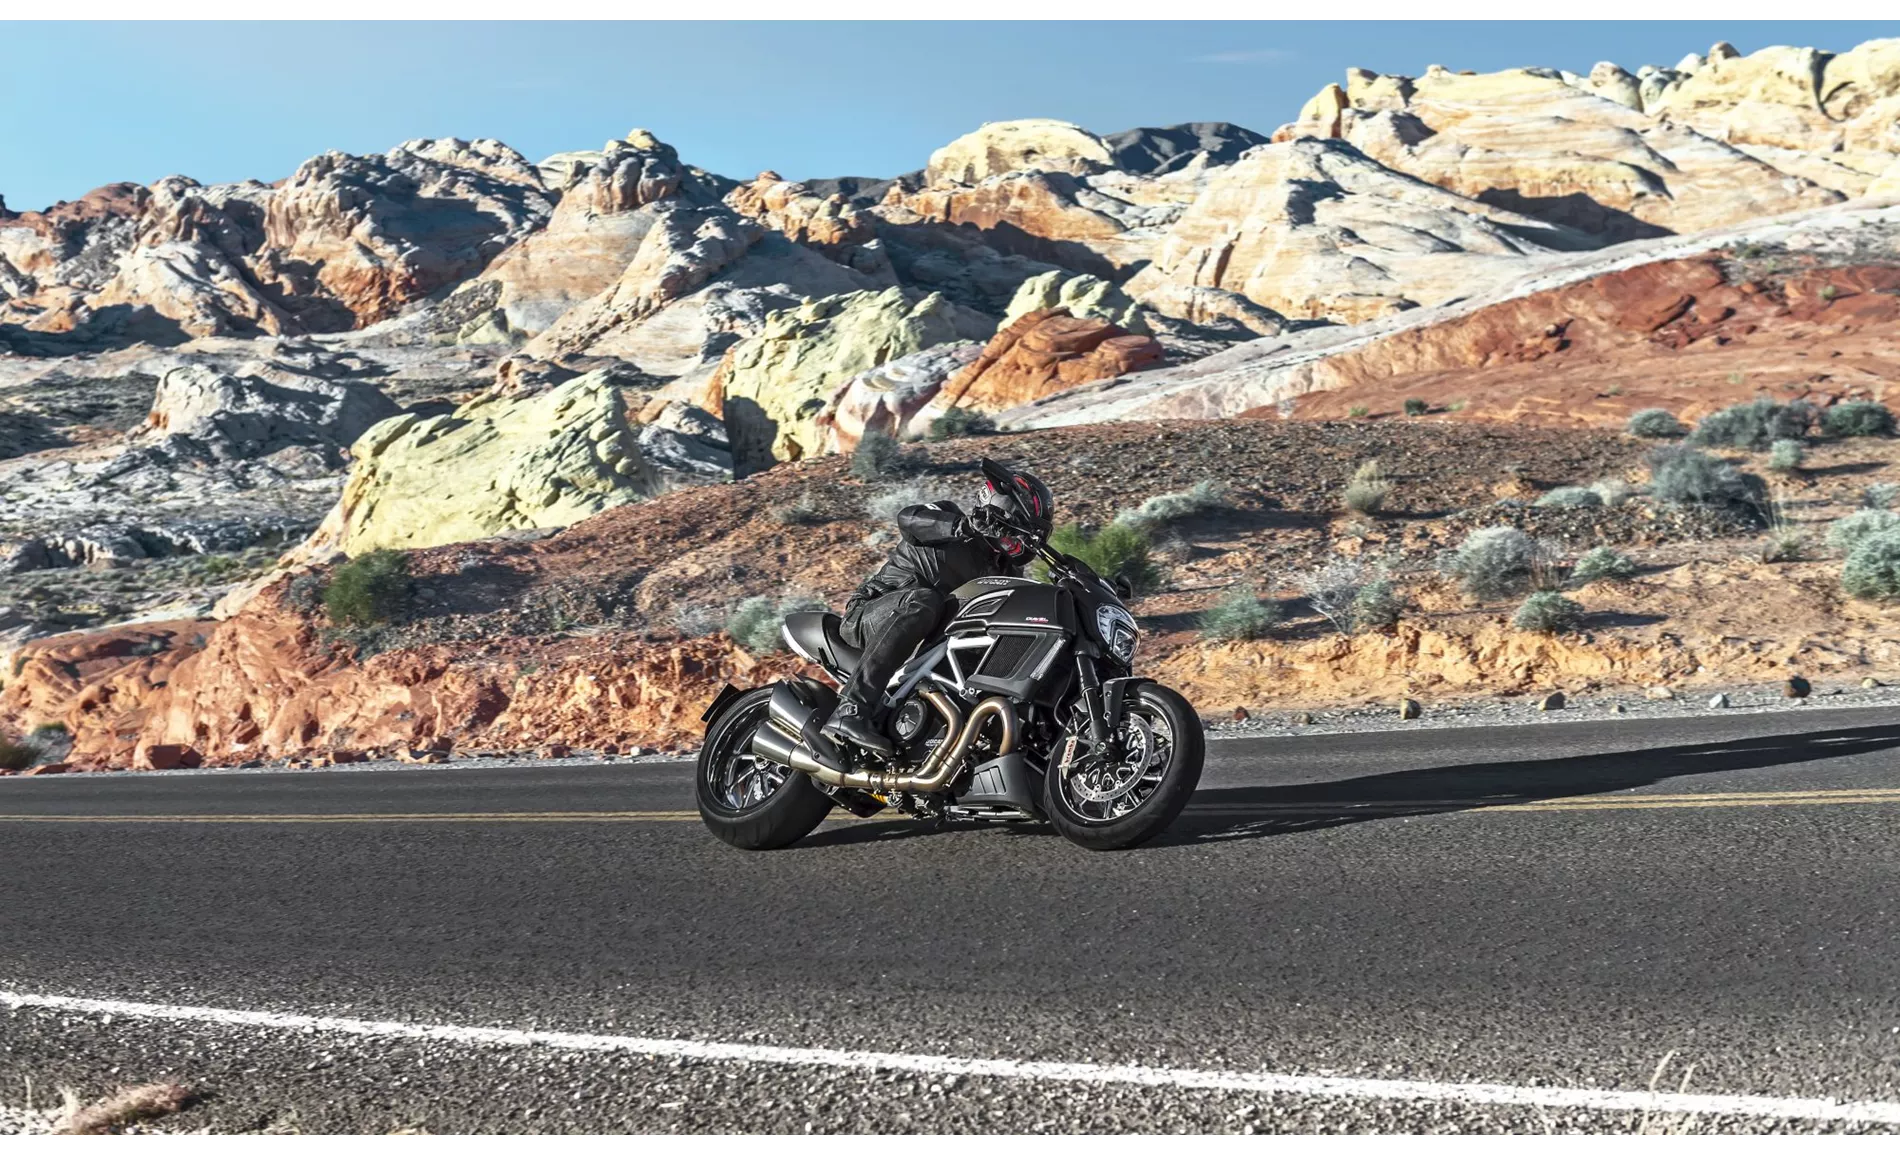 Ducati Diavel Carbon 2014